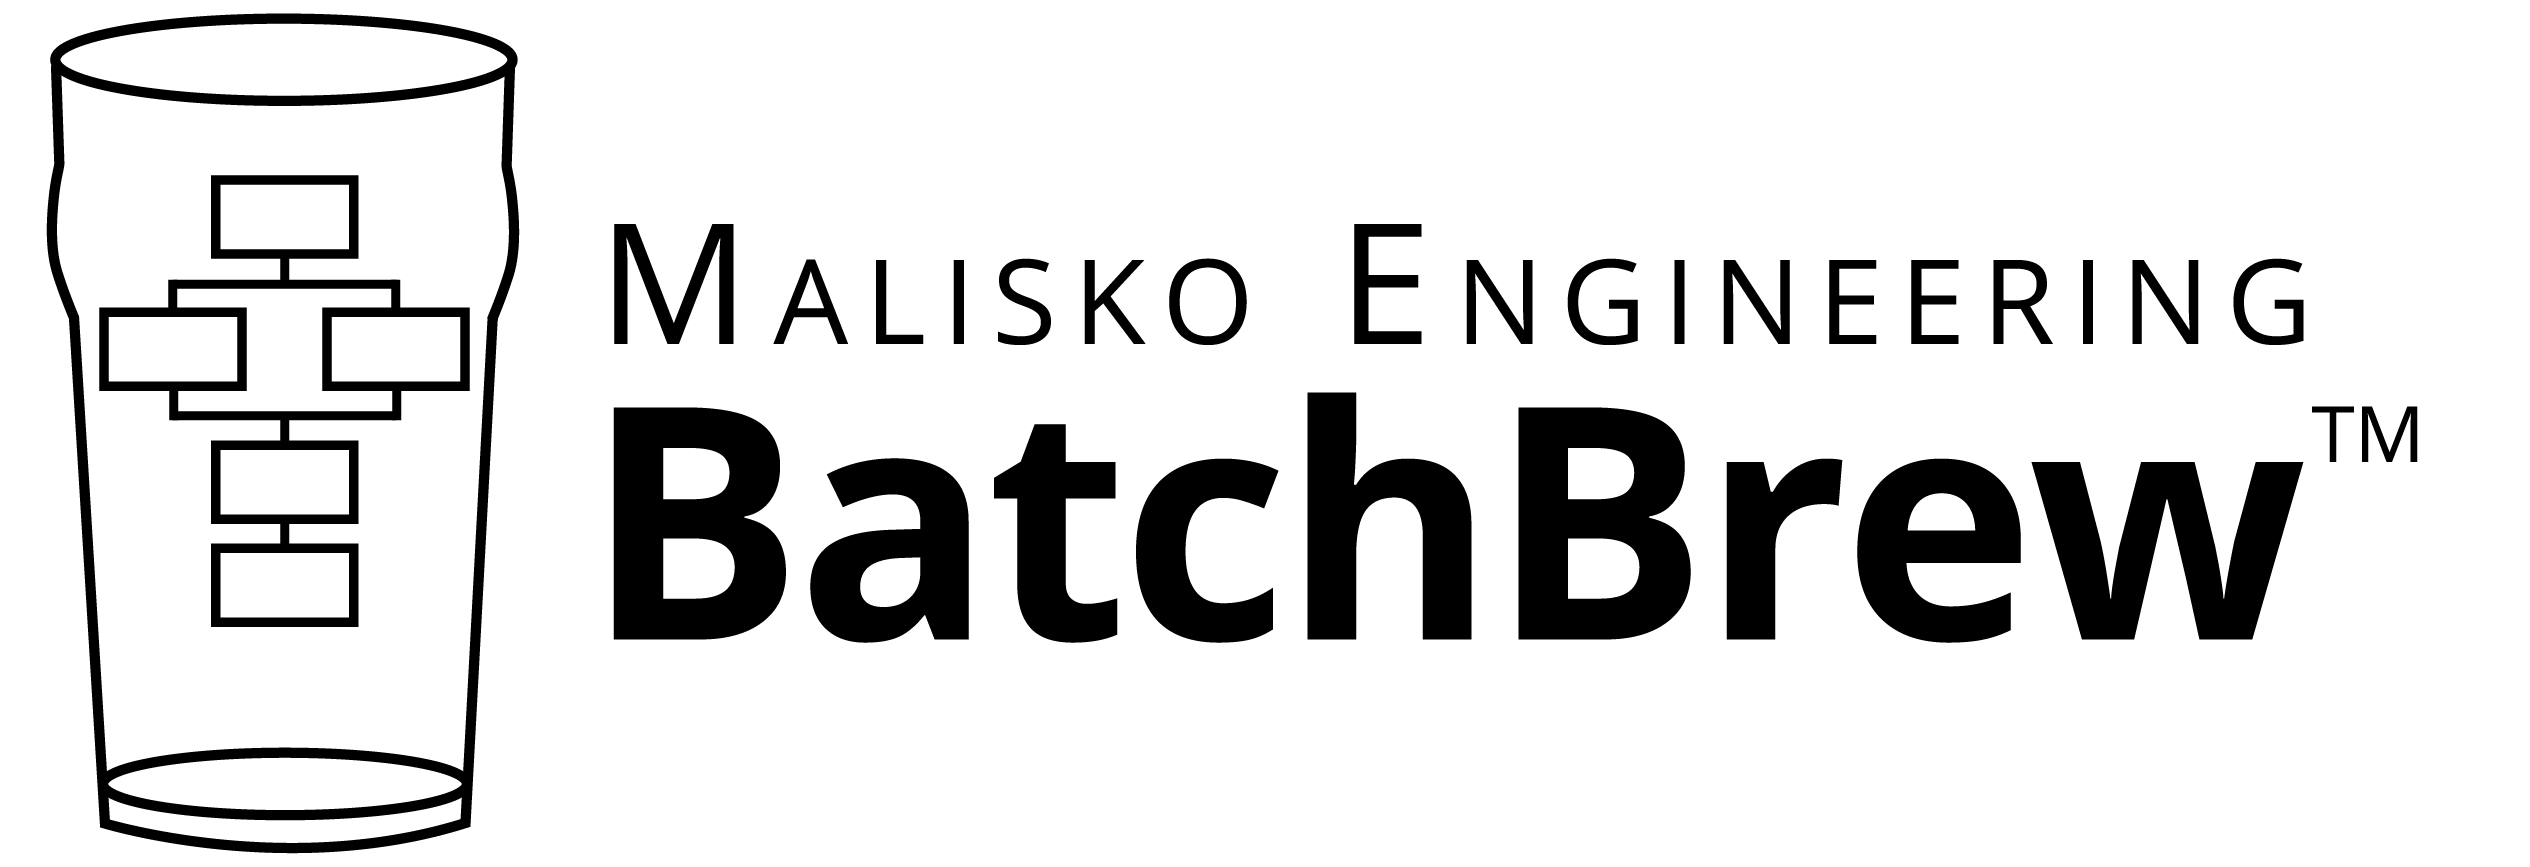 Malisko Engineering, Inc. BatchBrew Logo